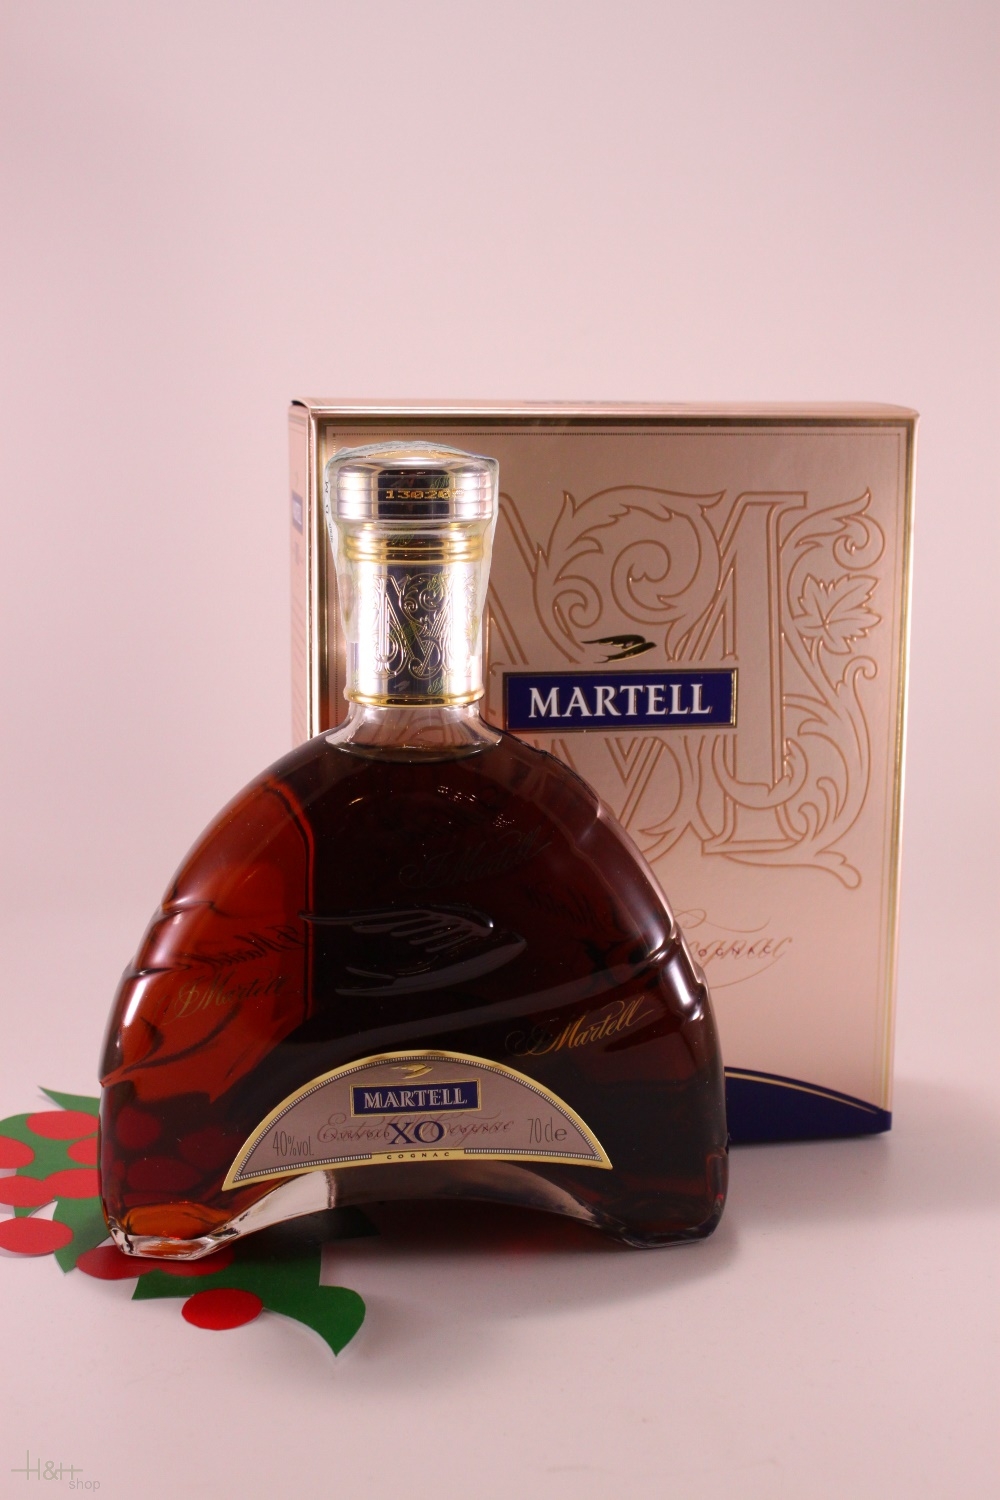 Martell коньяк купить. Коньяк Мартель Хо. Martell Cognac XO 70. Мартель кальвадос. Мартель коньяк 800 долл.